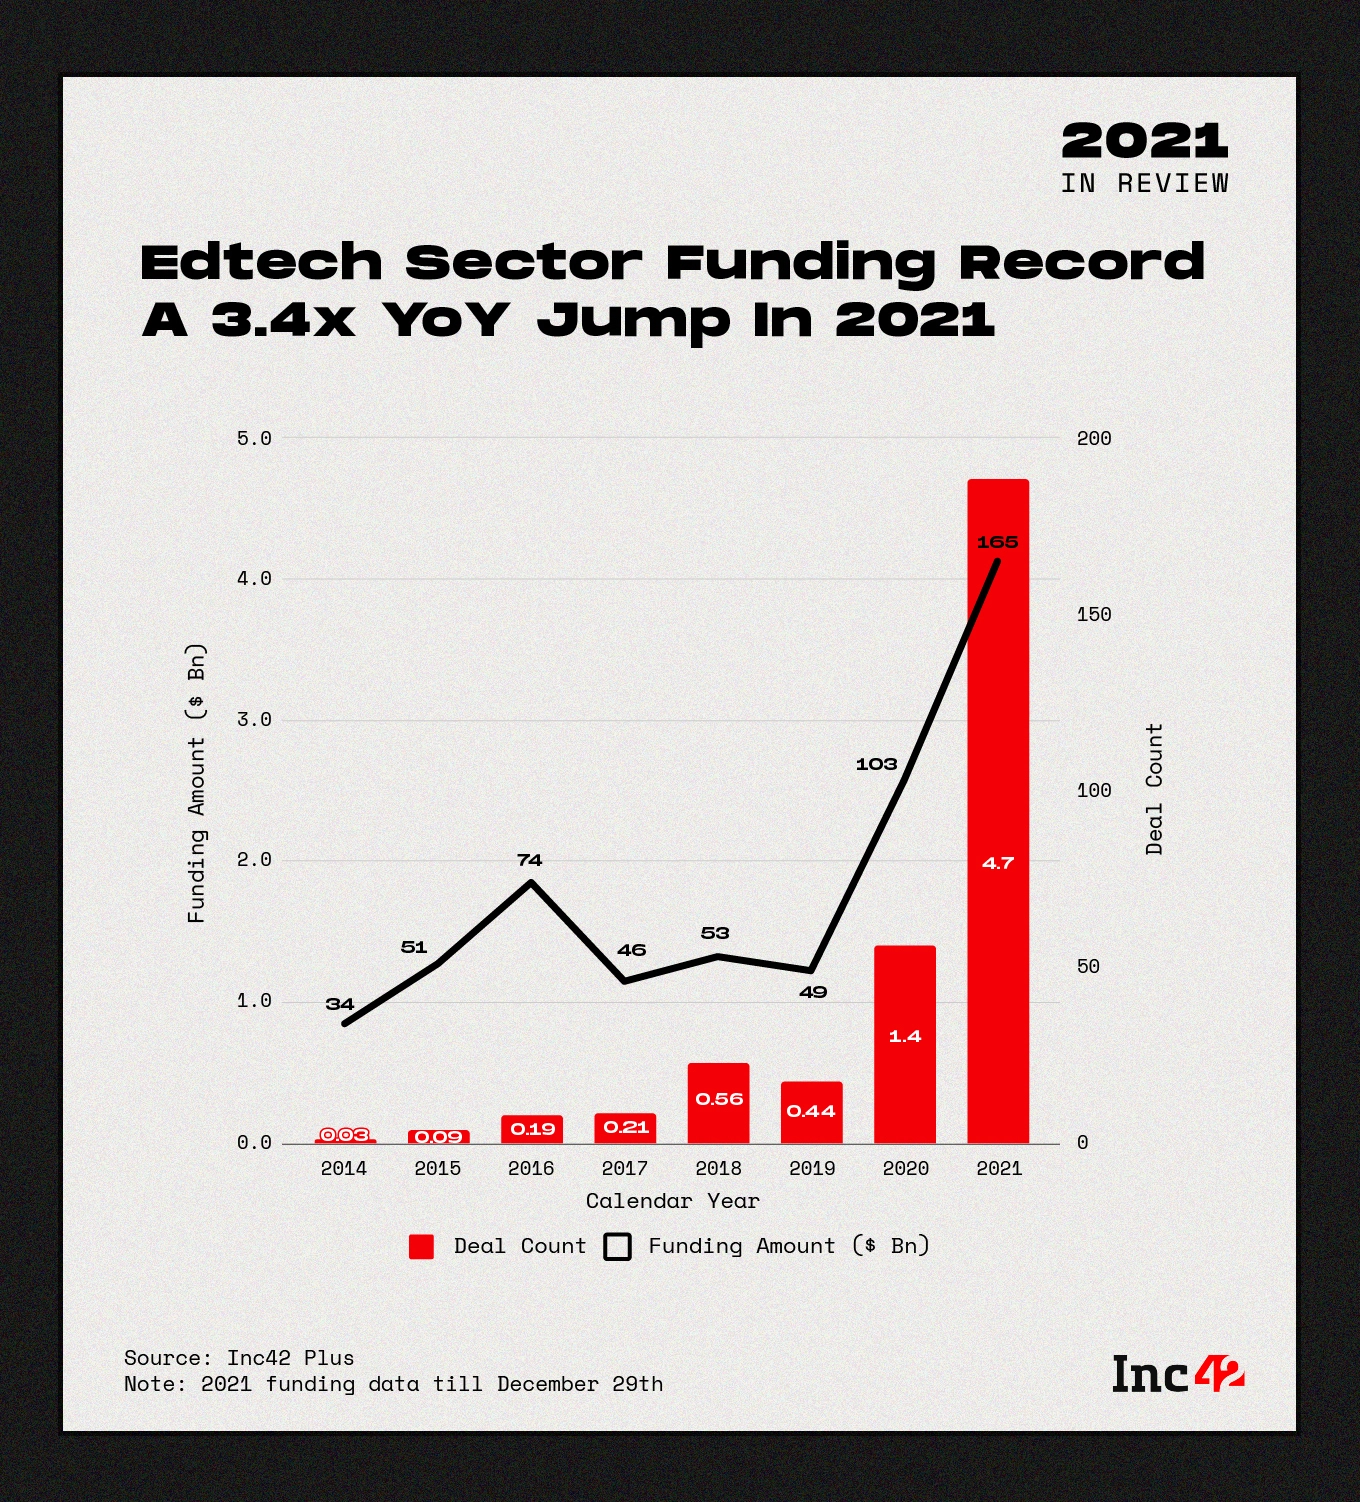 edtech sector funding record jump 2021